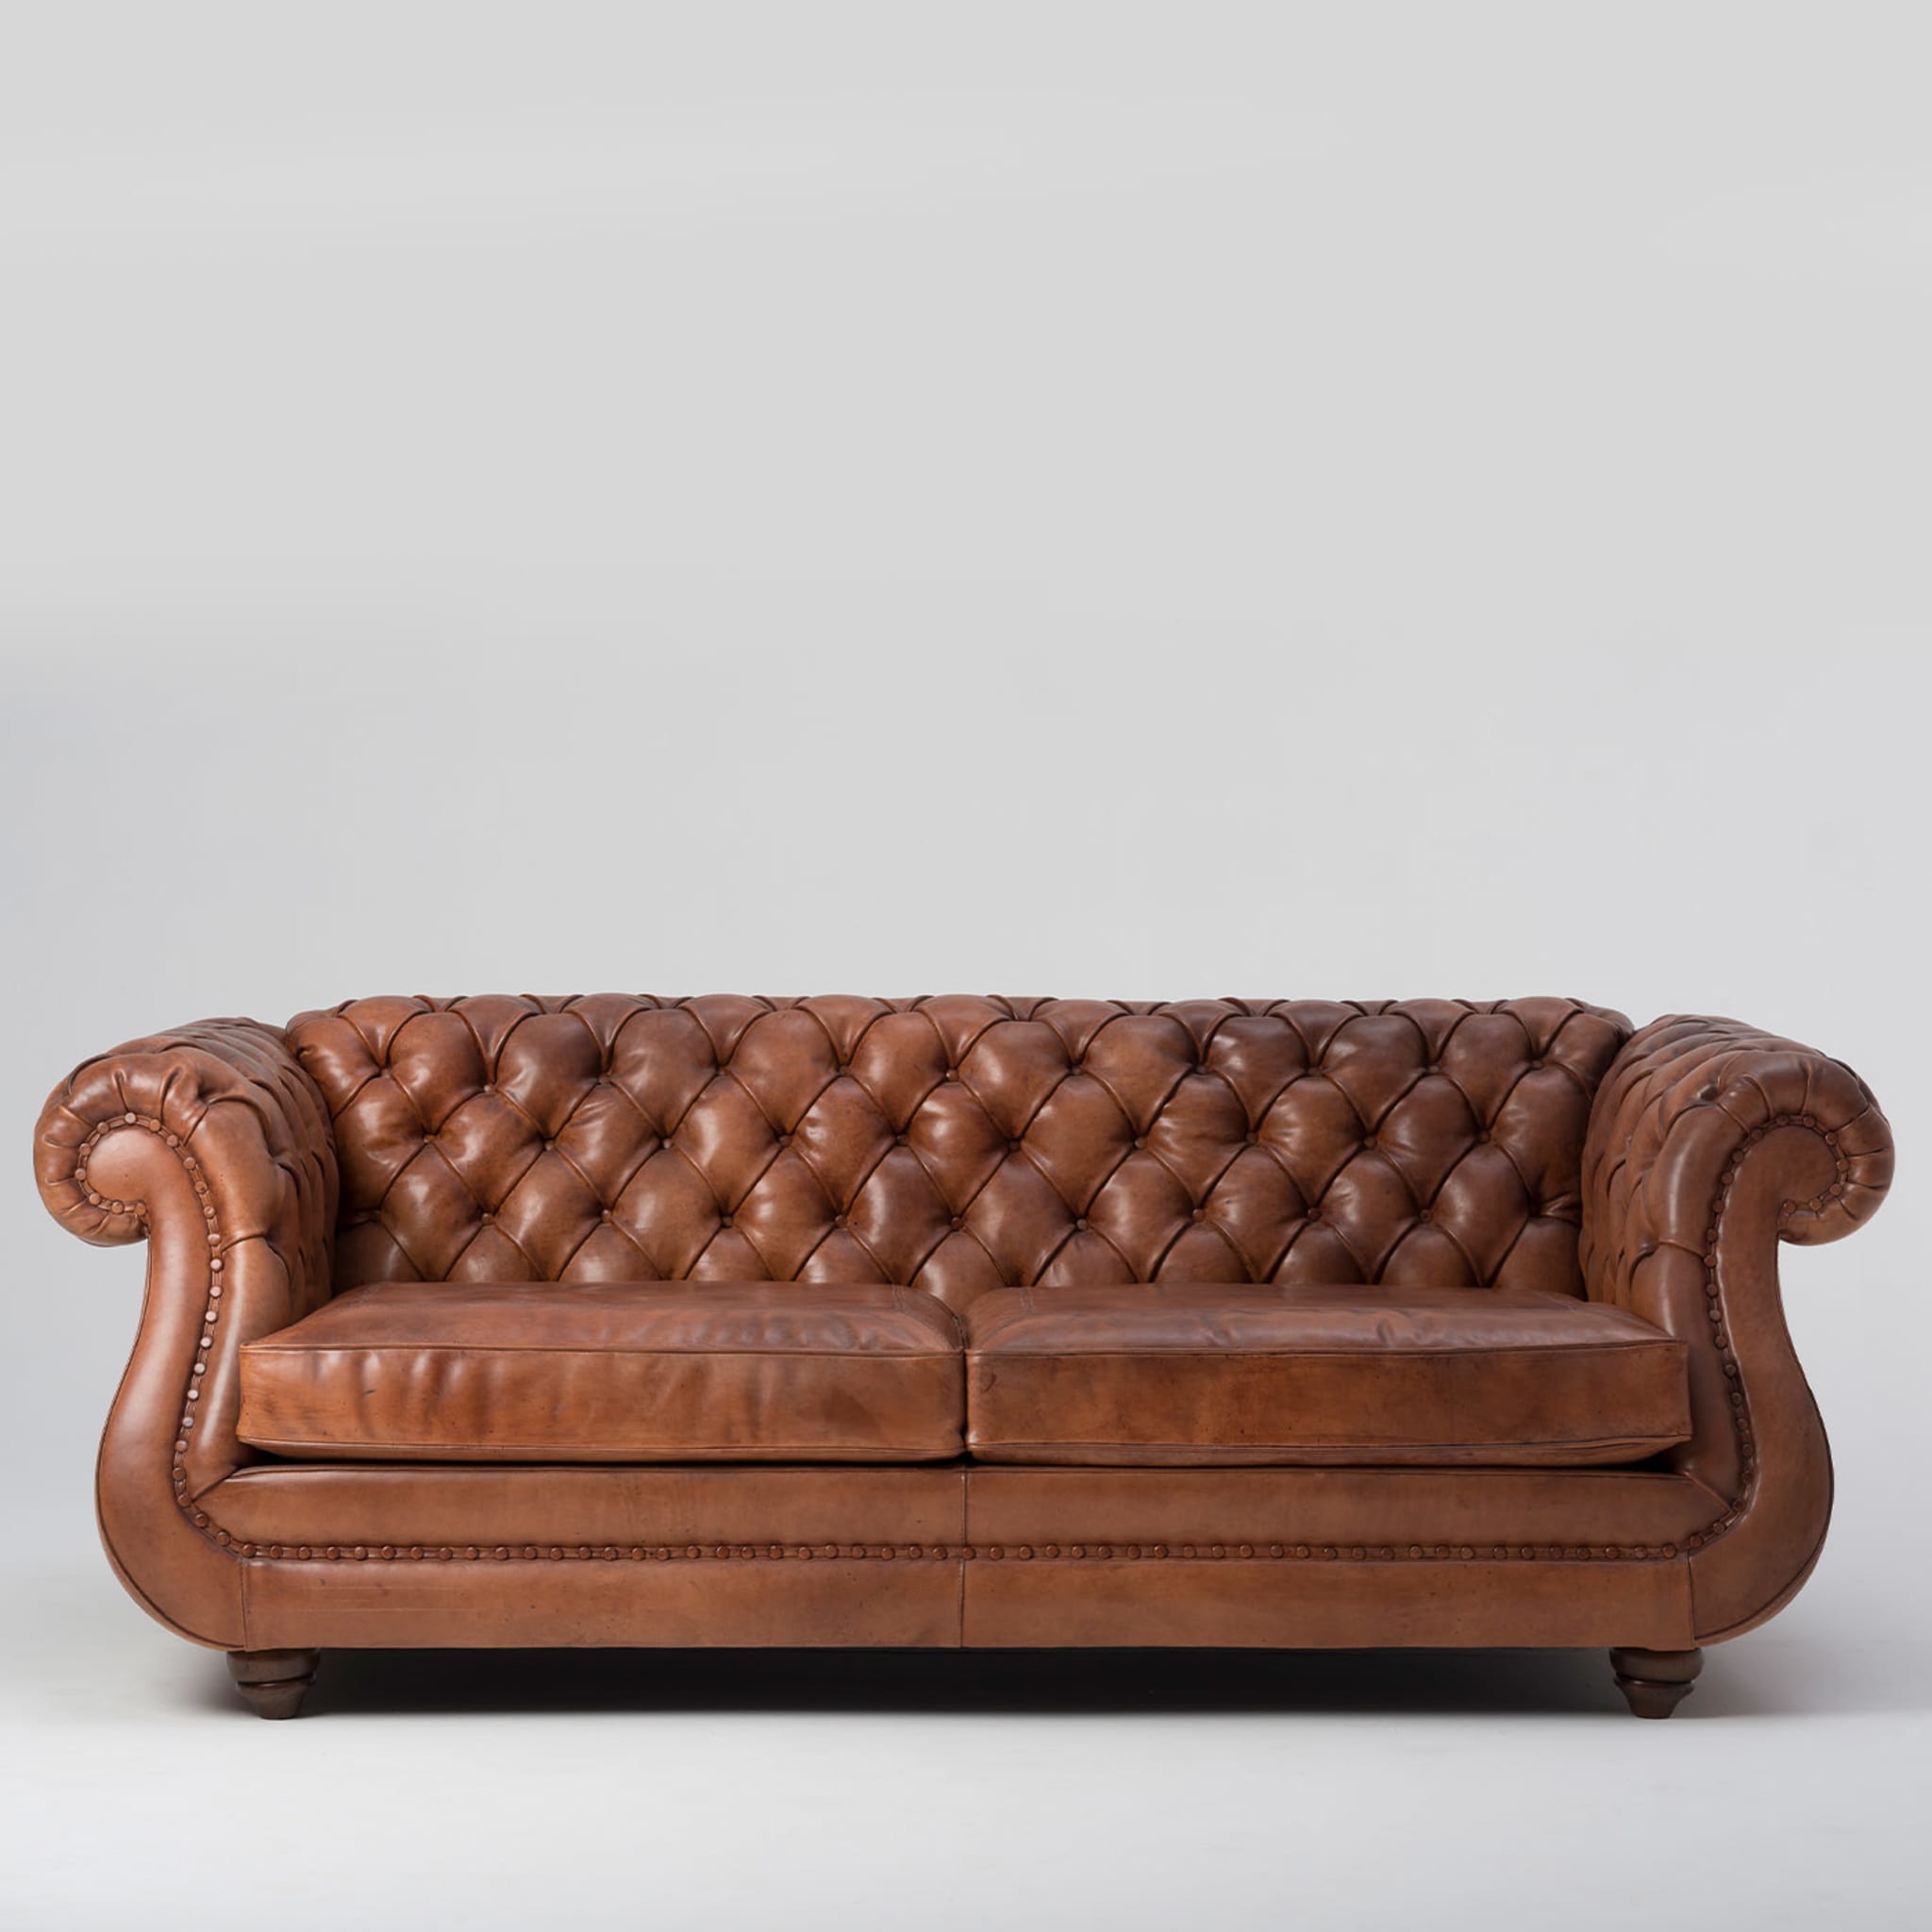 Tipo 3 Seater Sofa by Marco and Giulio Mantellassi - Alternative view 1